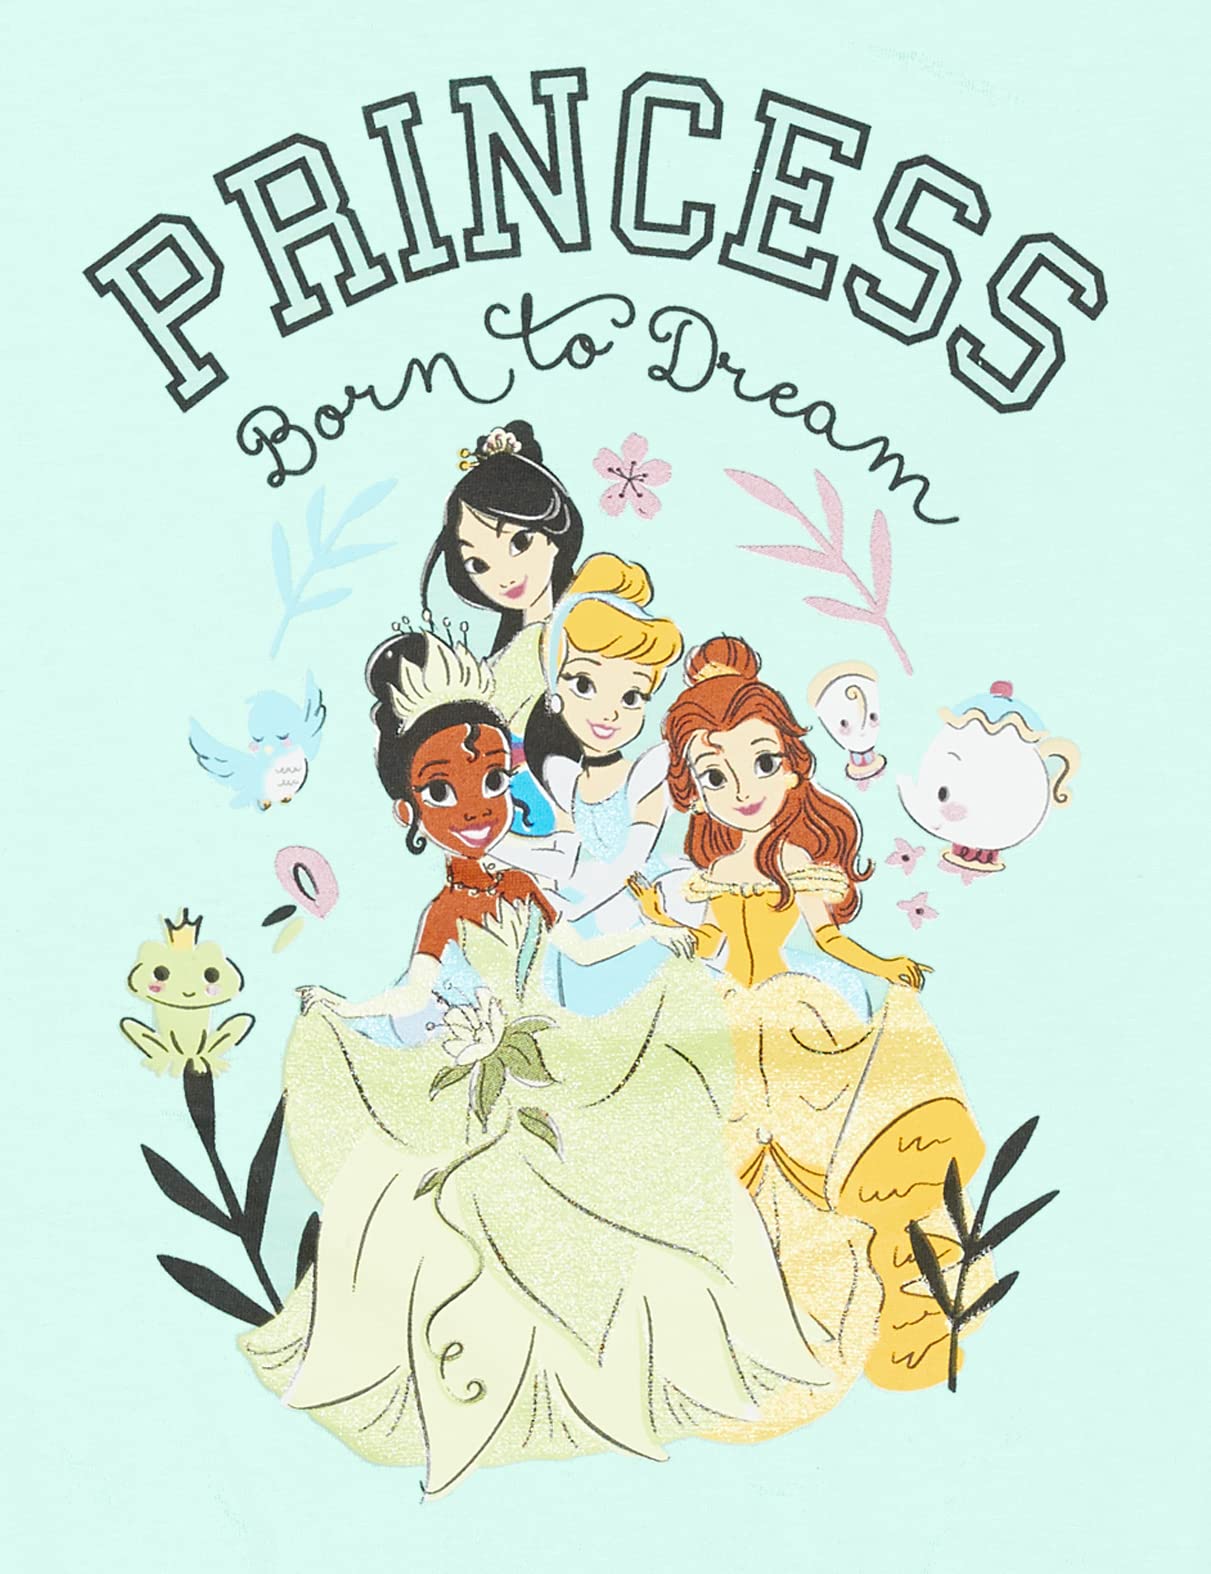 Disney Princess Girls T-Shirt-Cinderella, Belle, Tiana